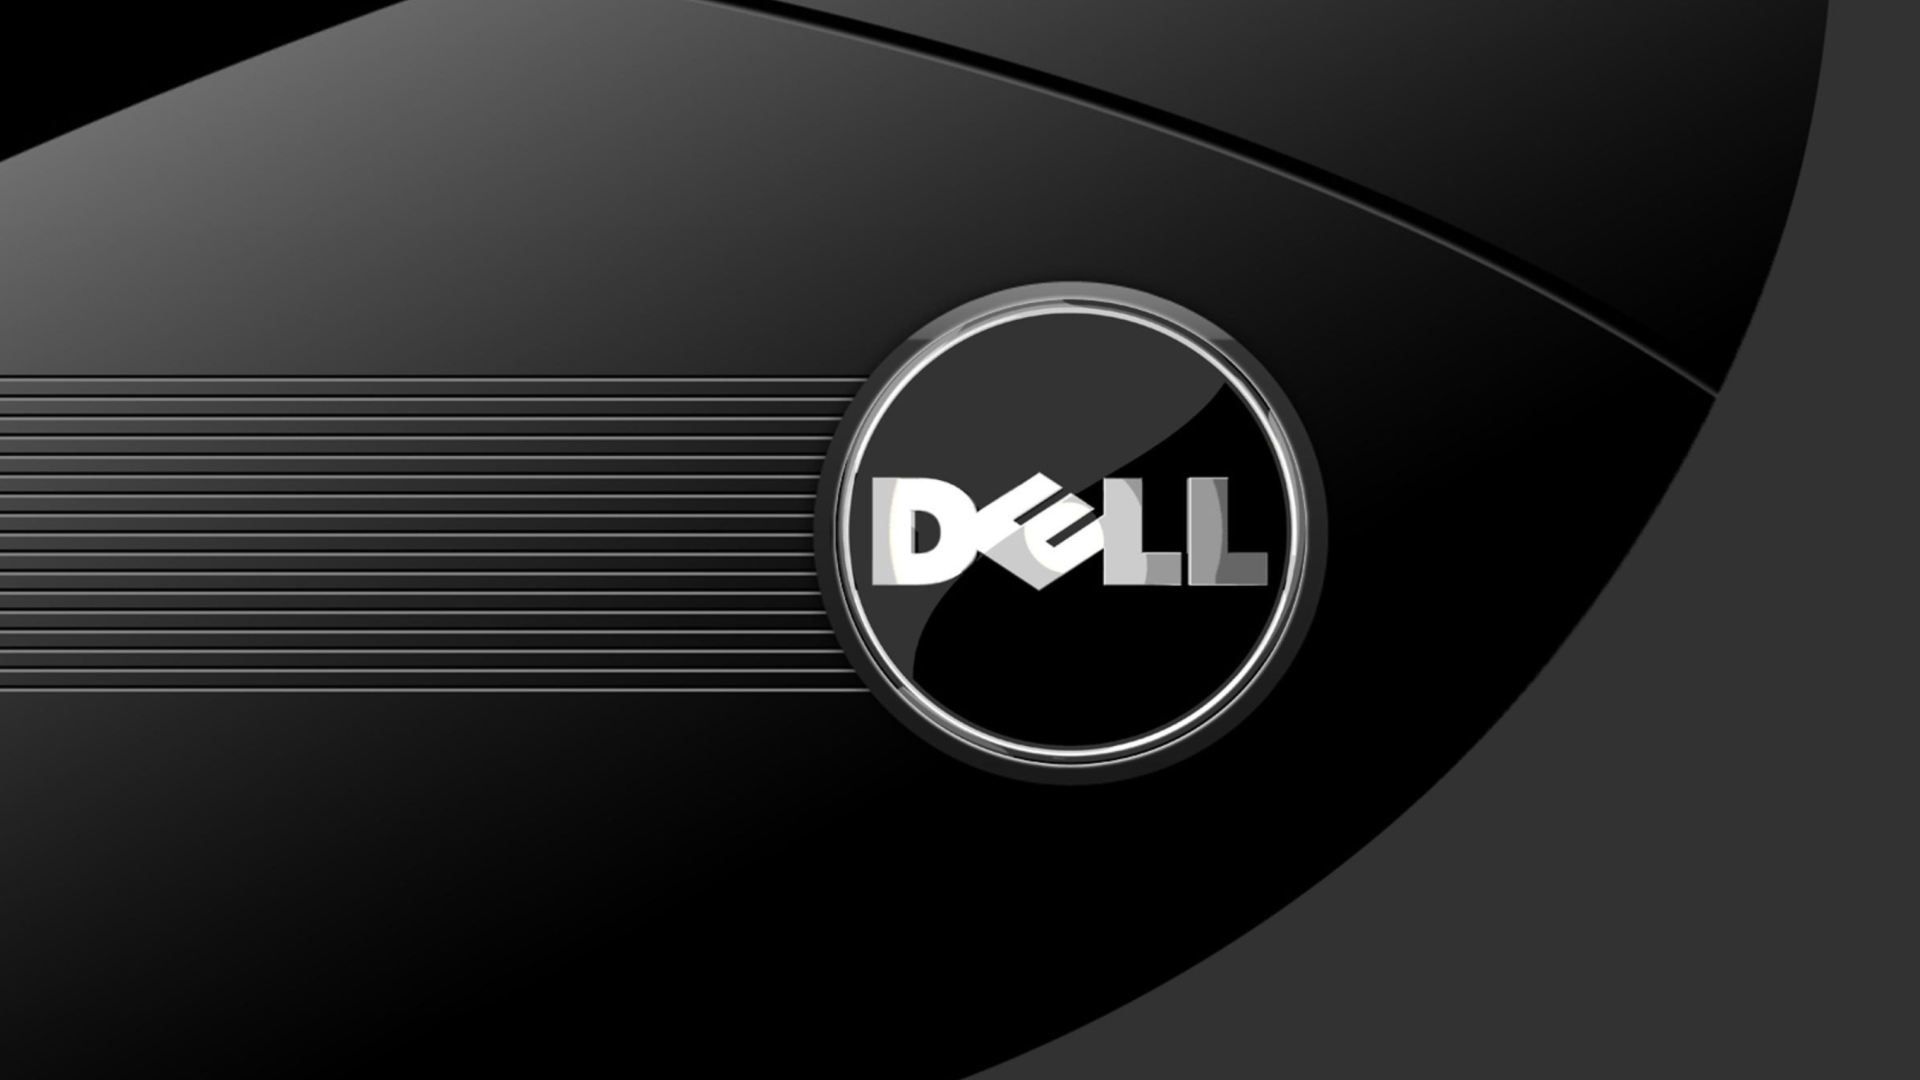 Dell Black And White Logo wallpaper 1920x1080